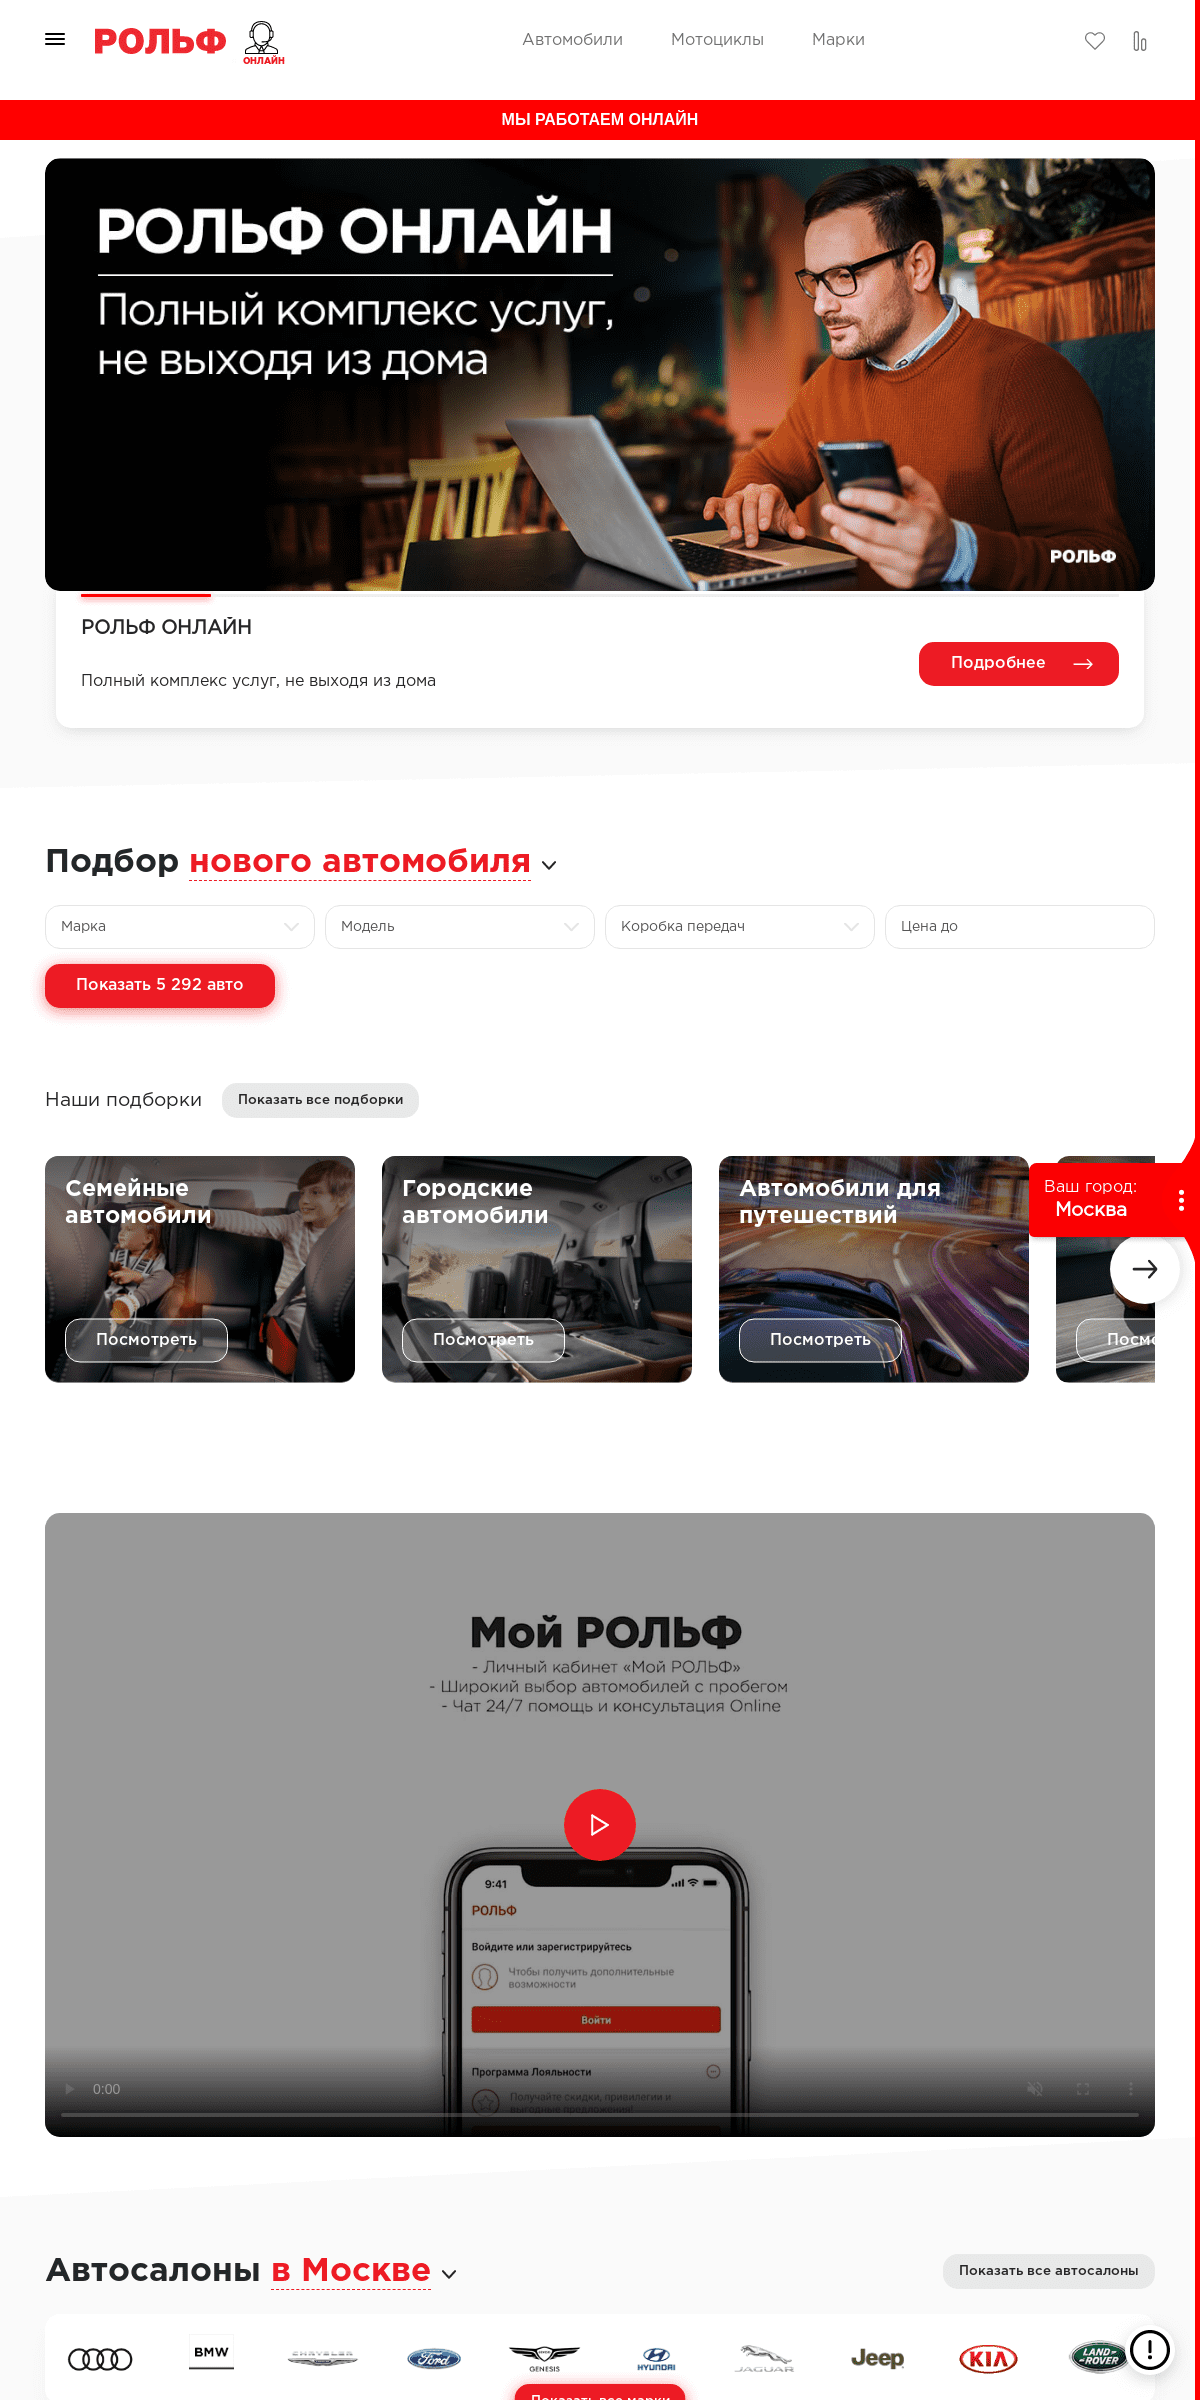 A complete backup of rolf.ru